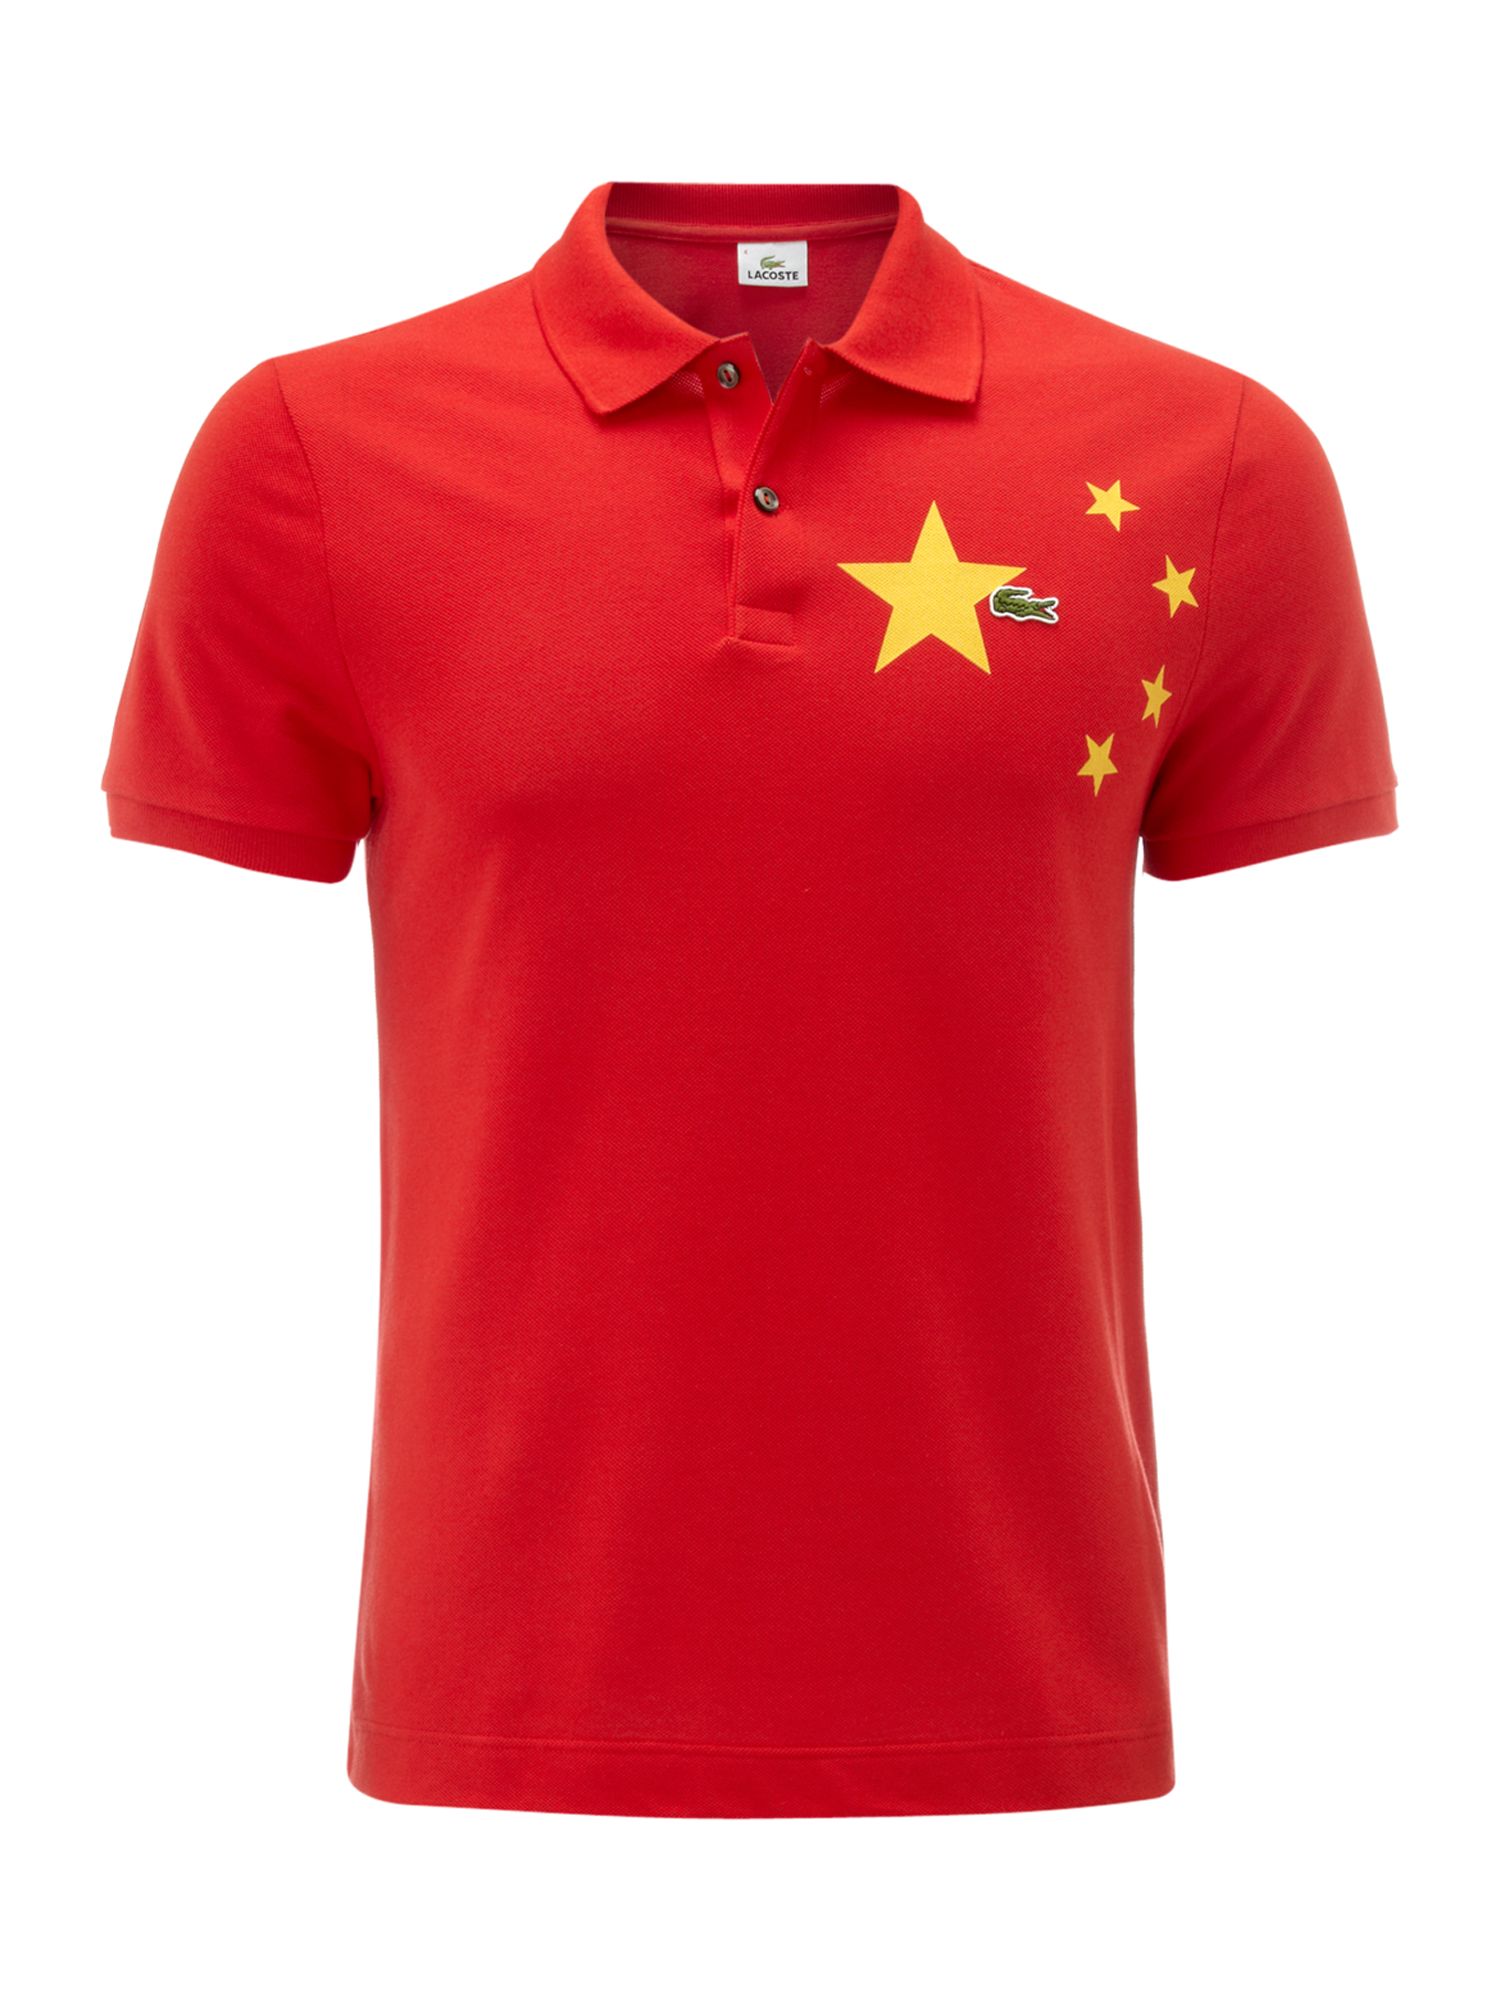 Contaminar Granjero inflación cheap lacoste polo shirts from china لم يسبق له مثيل الصور + tier3.xyz